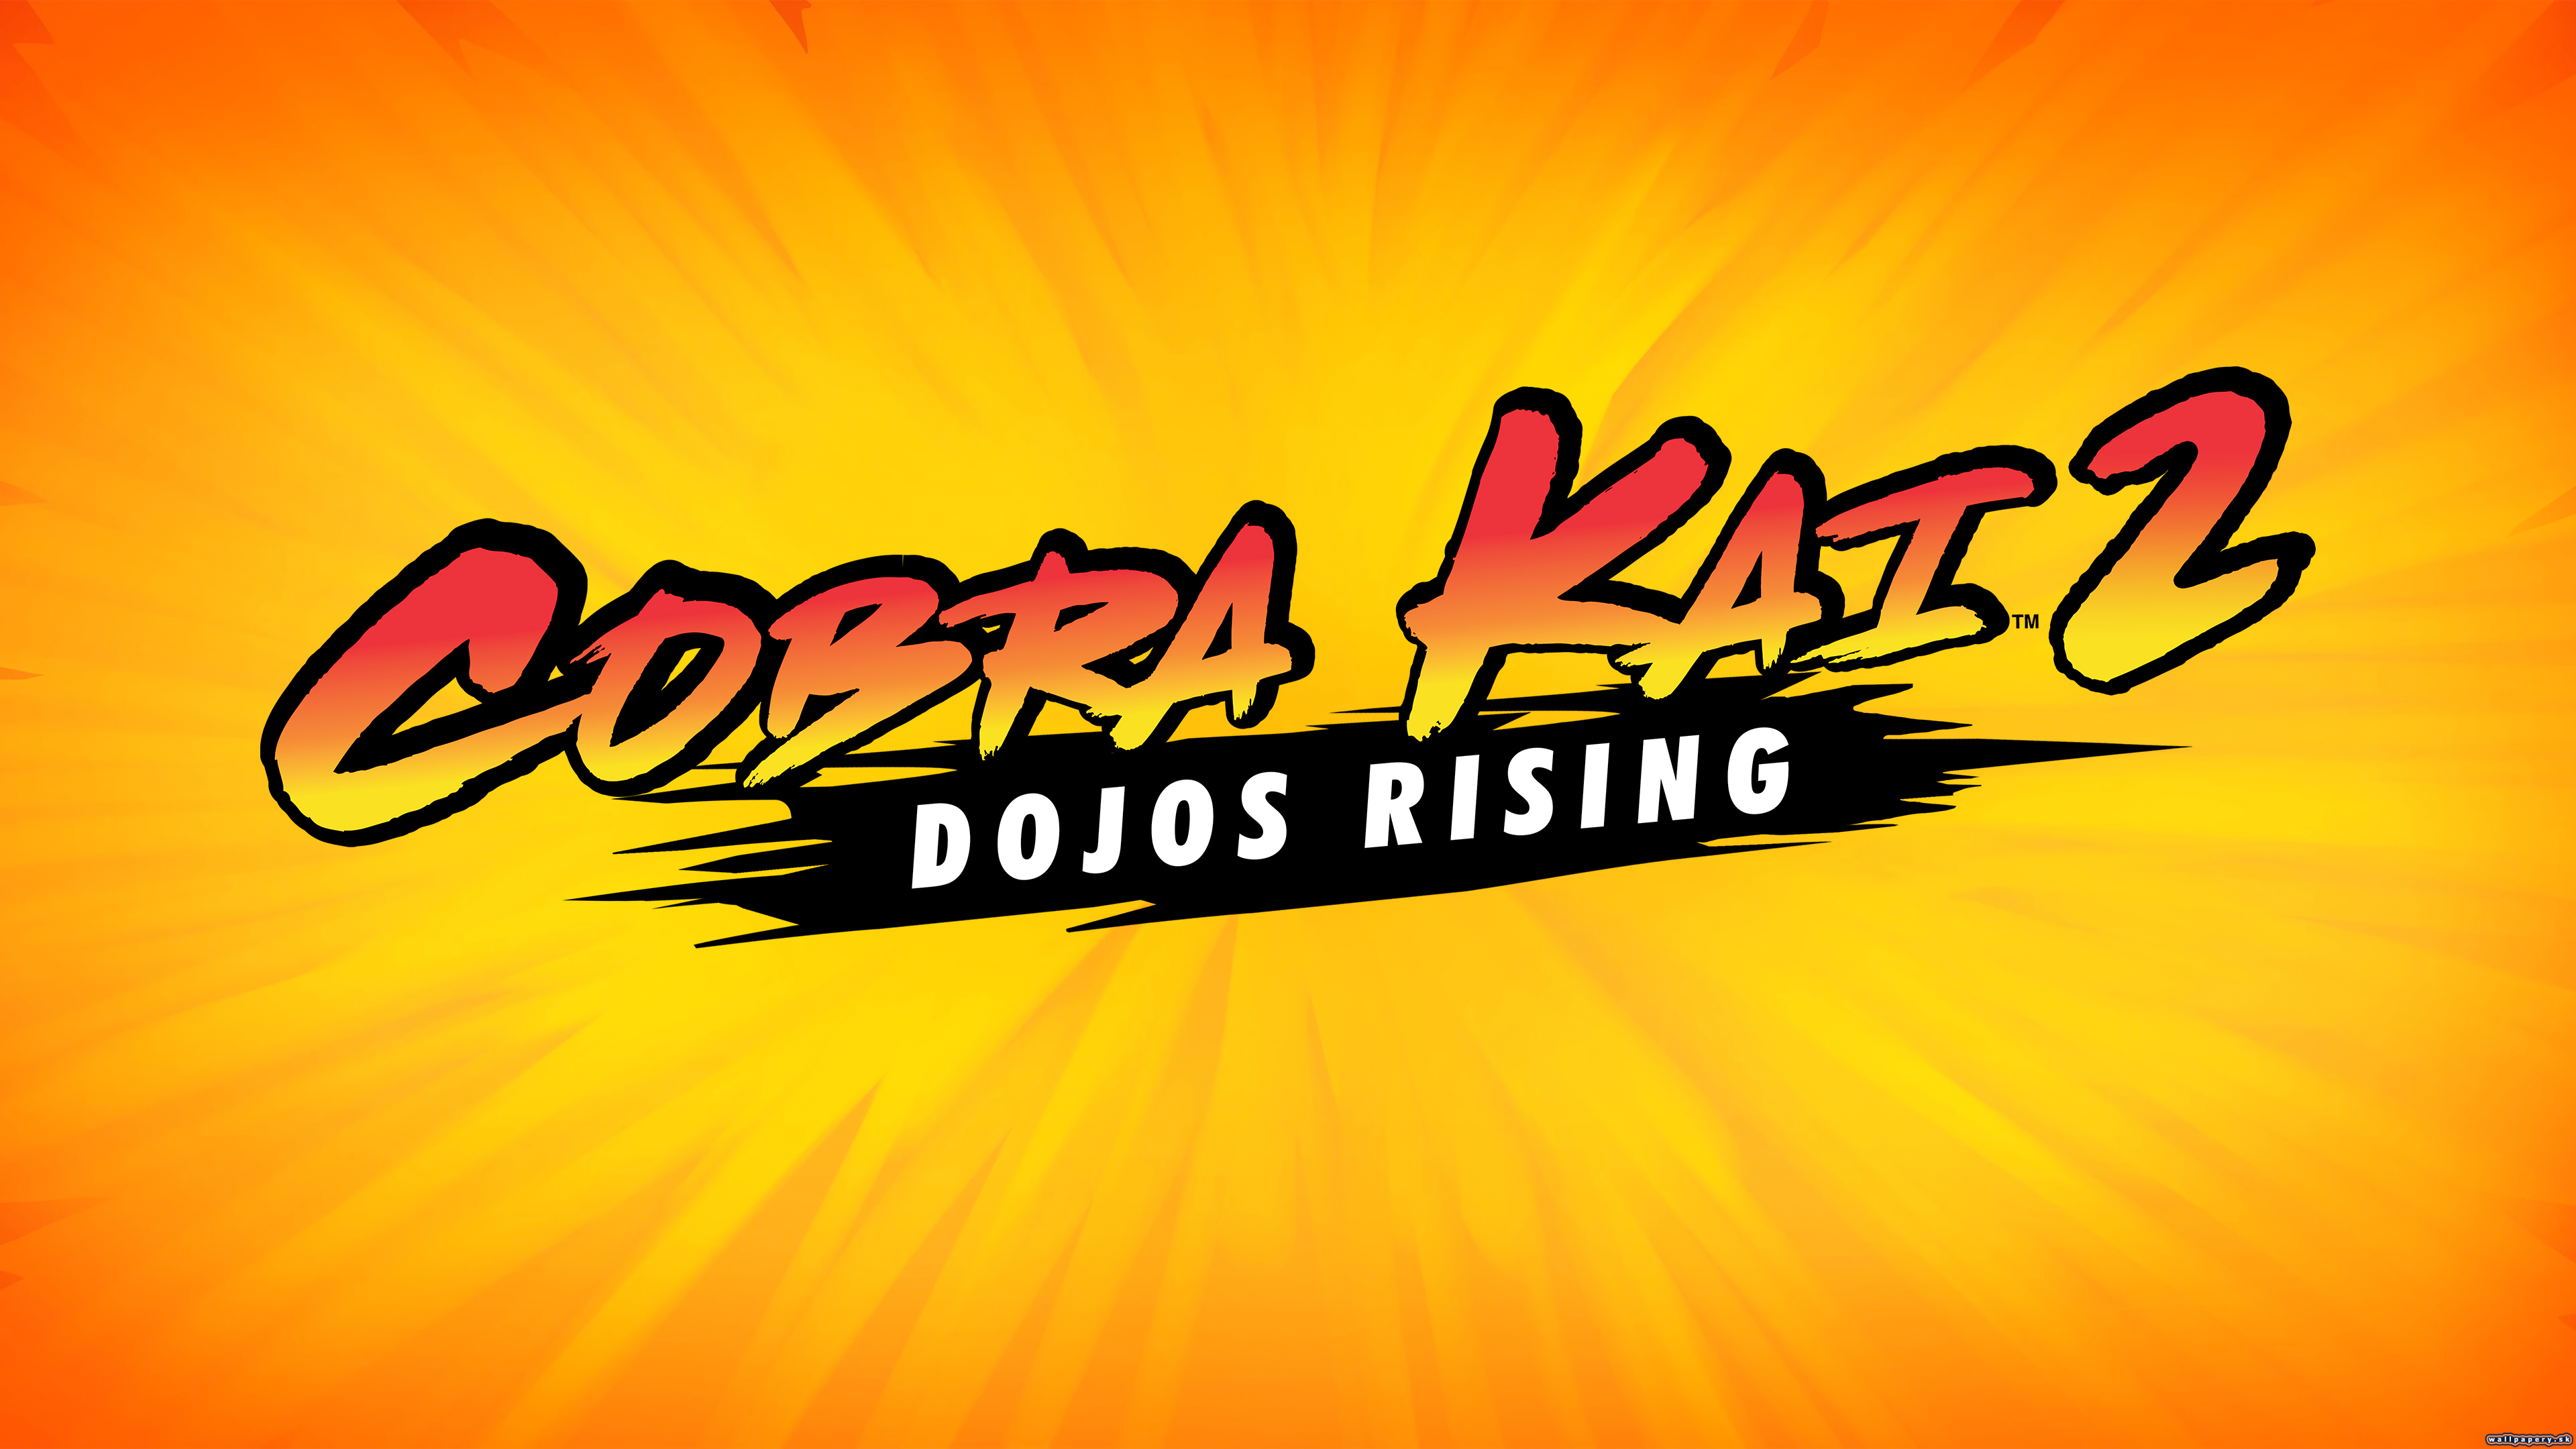 Cobra Kai 2: Dojos Rising - wallpaper 2